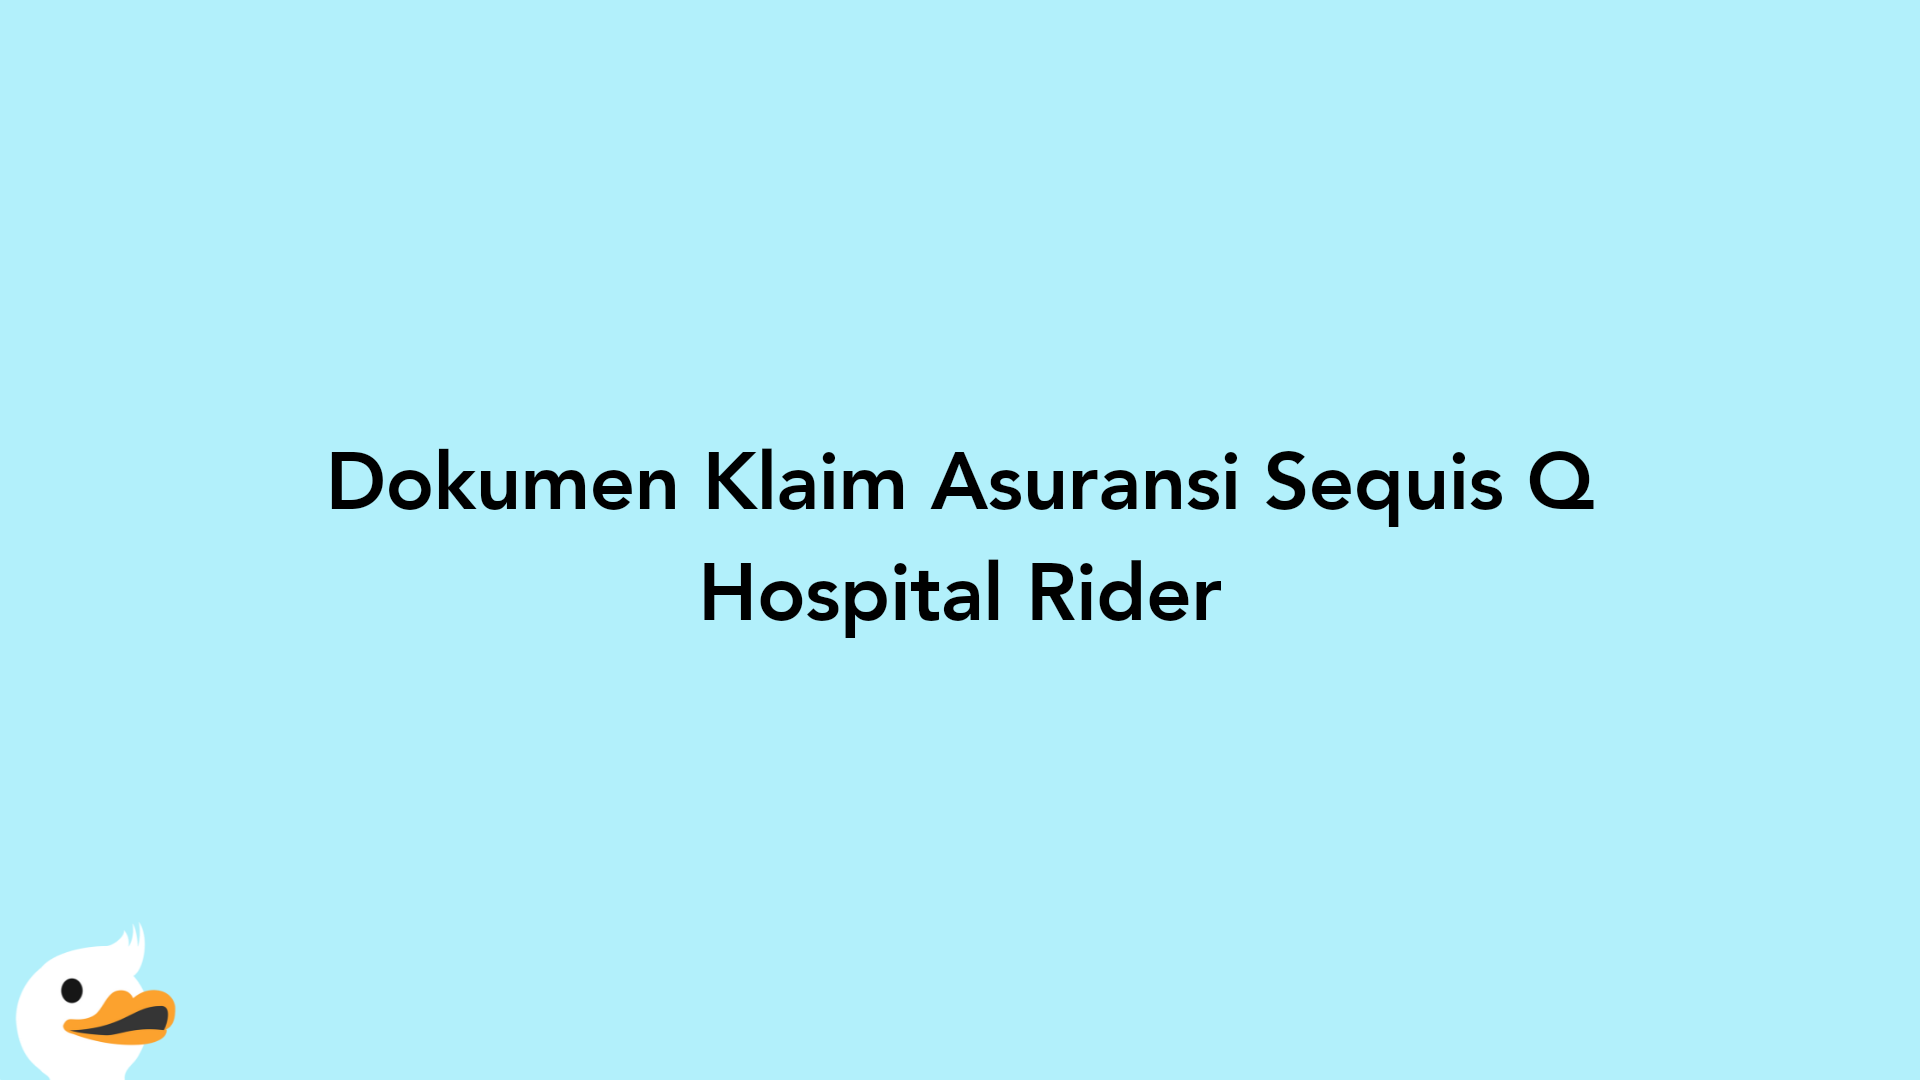 Dokumen Klaim Asuransi Sequis Q Hospital Rider